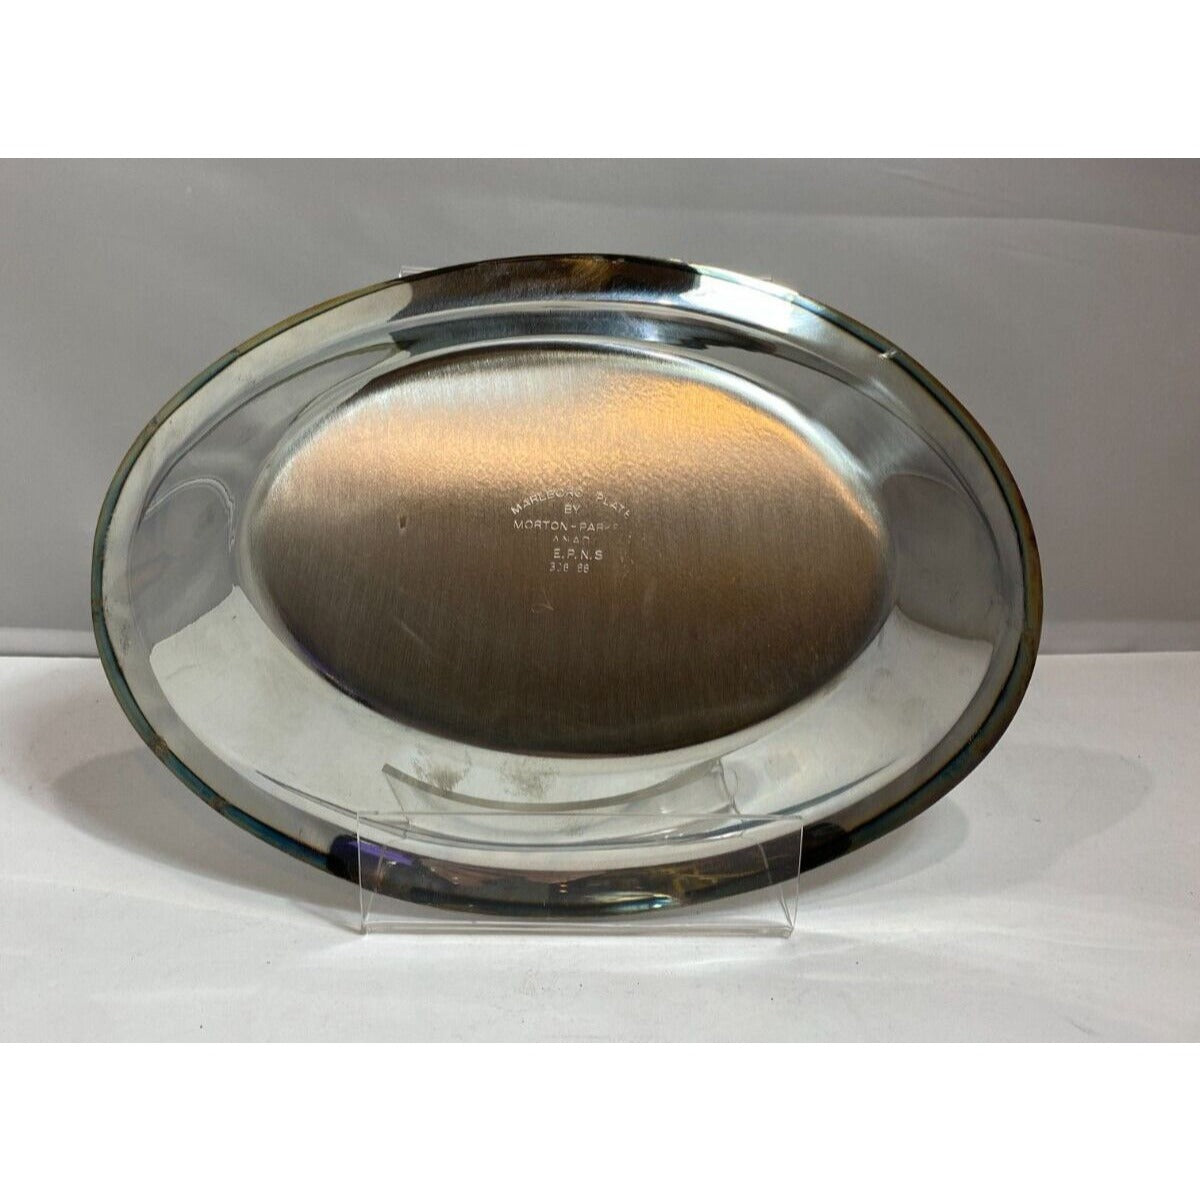 Vintage Marlboro Plate by Morton-Parker Oval Dish Platter Silverware 9.75 Inch